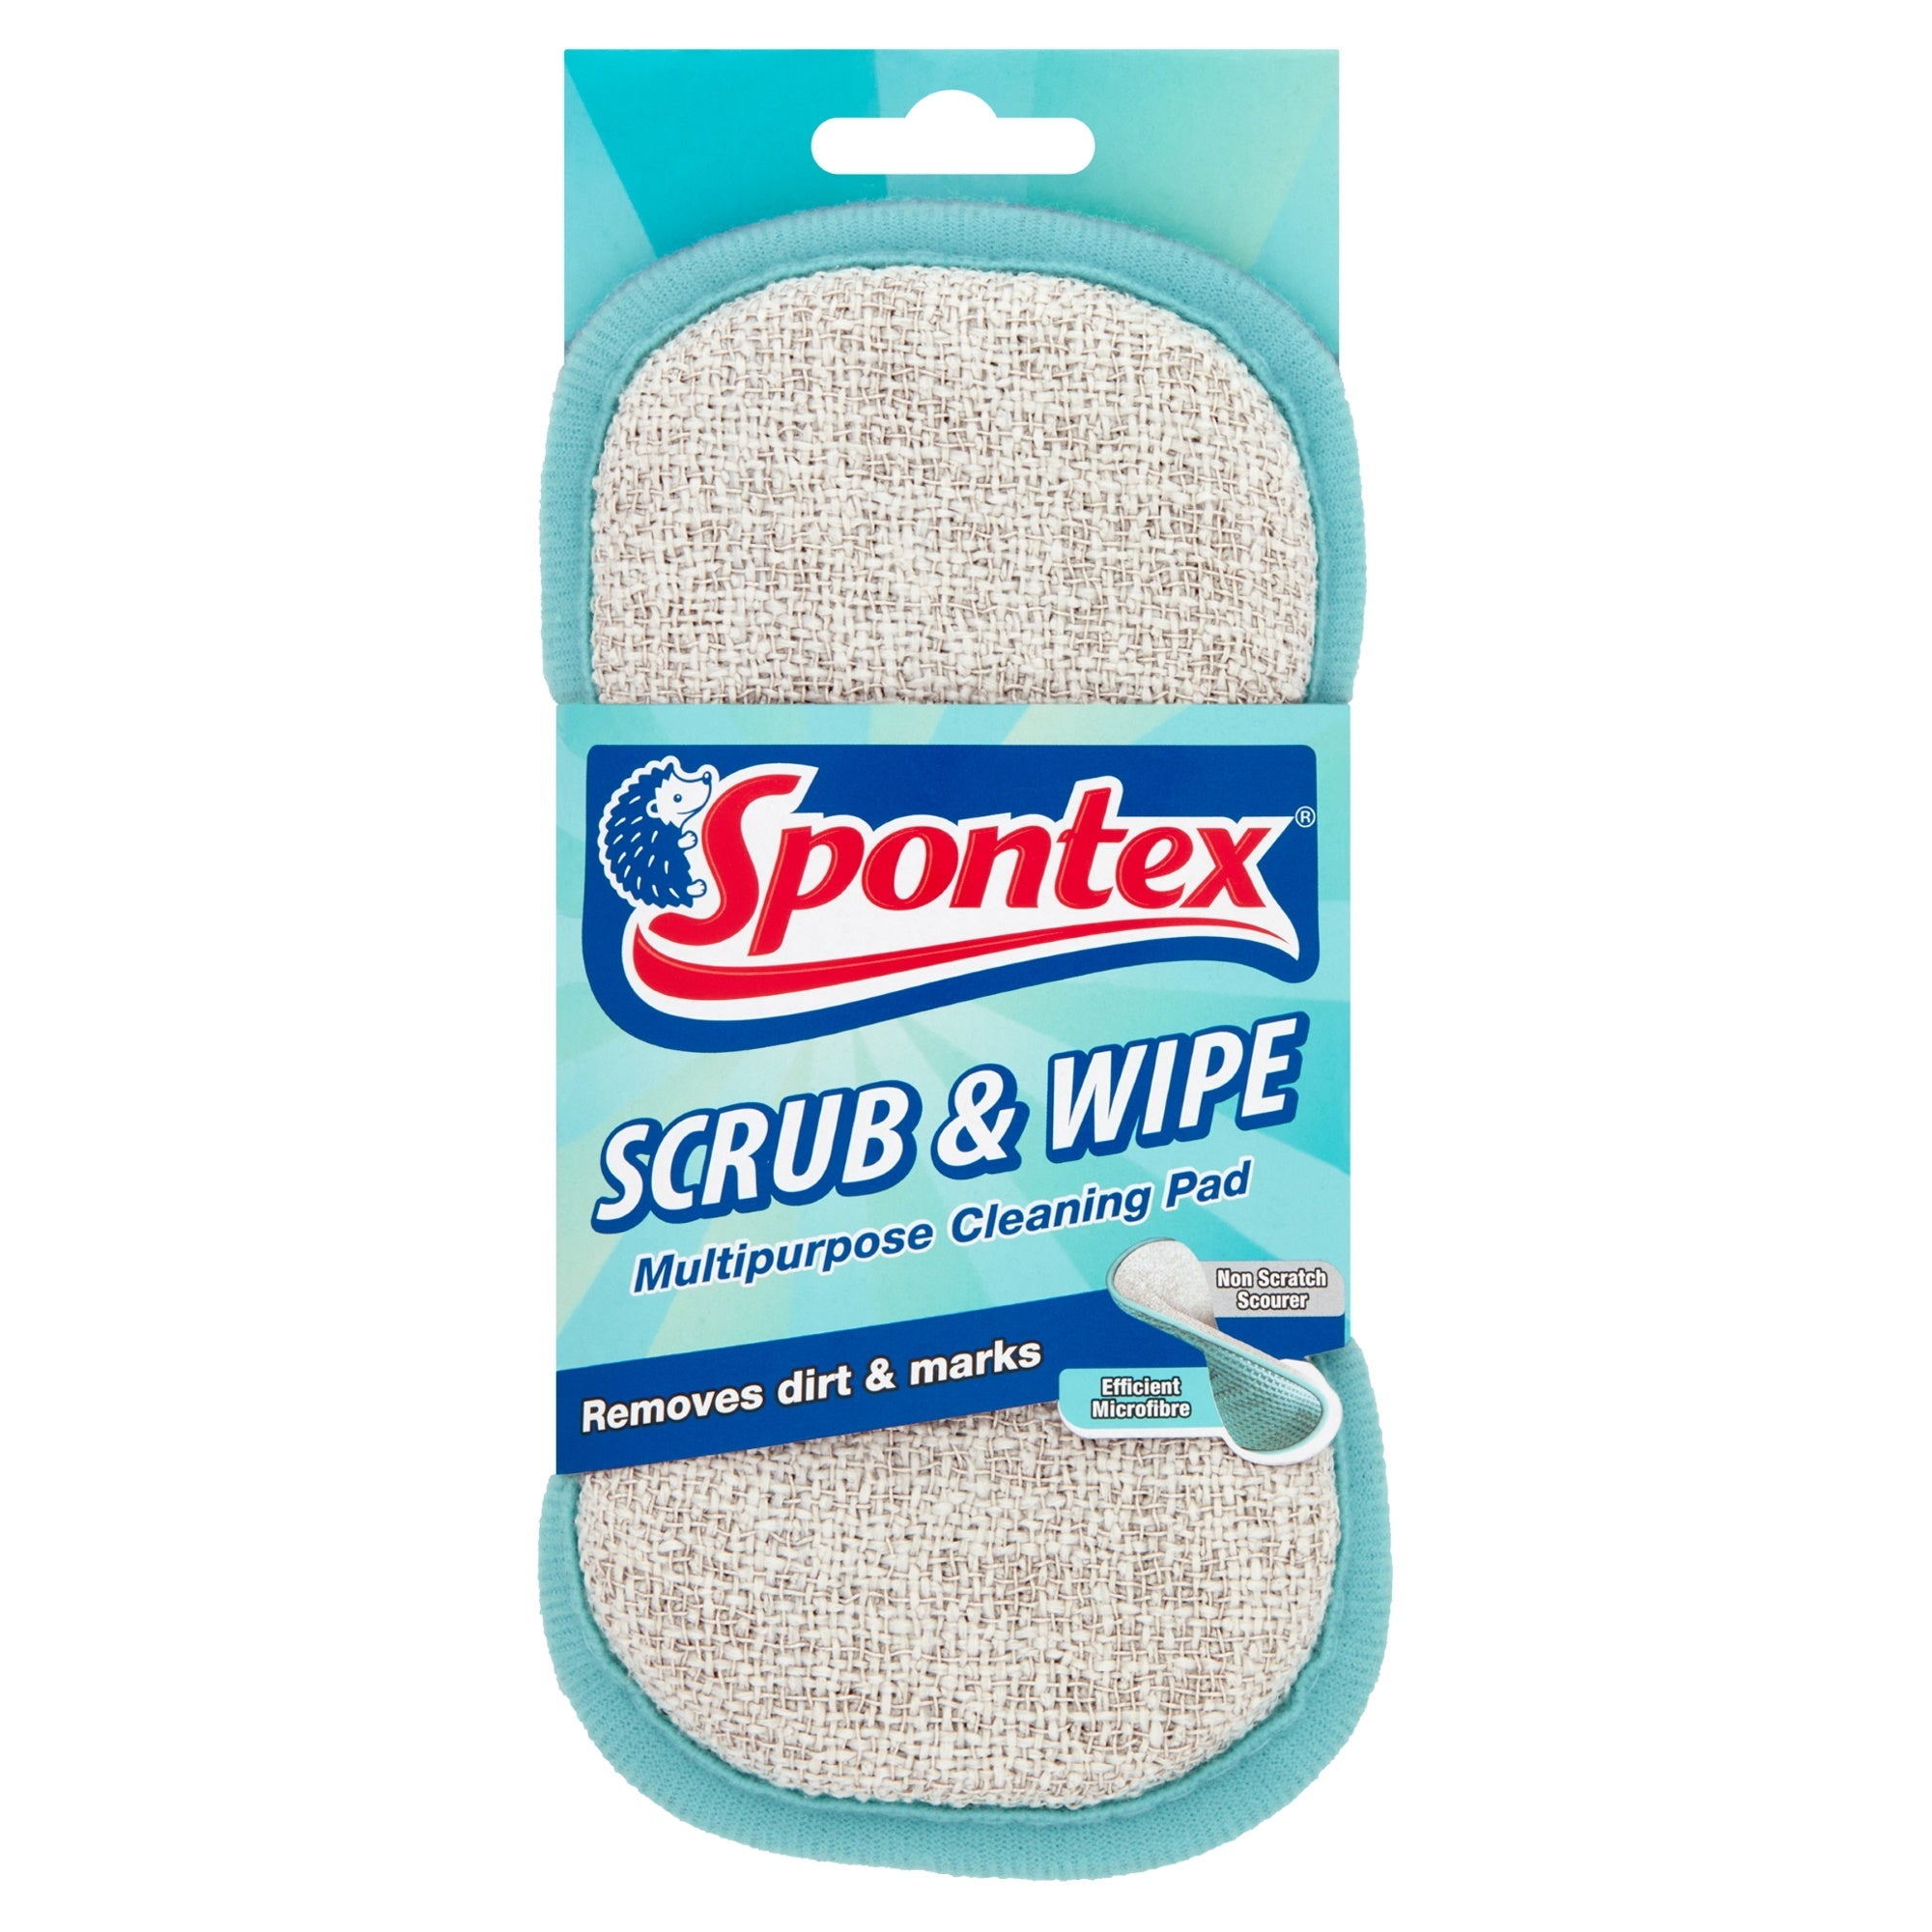 Spontex Scrub & Wipe Multi-Purpose Cleaning Pad  Buy Scourers / Sponges  from Spontex2.95 – W Hurst & Son (IW) Ltd